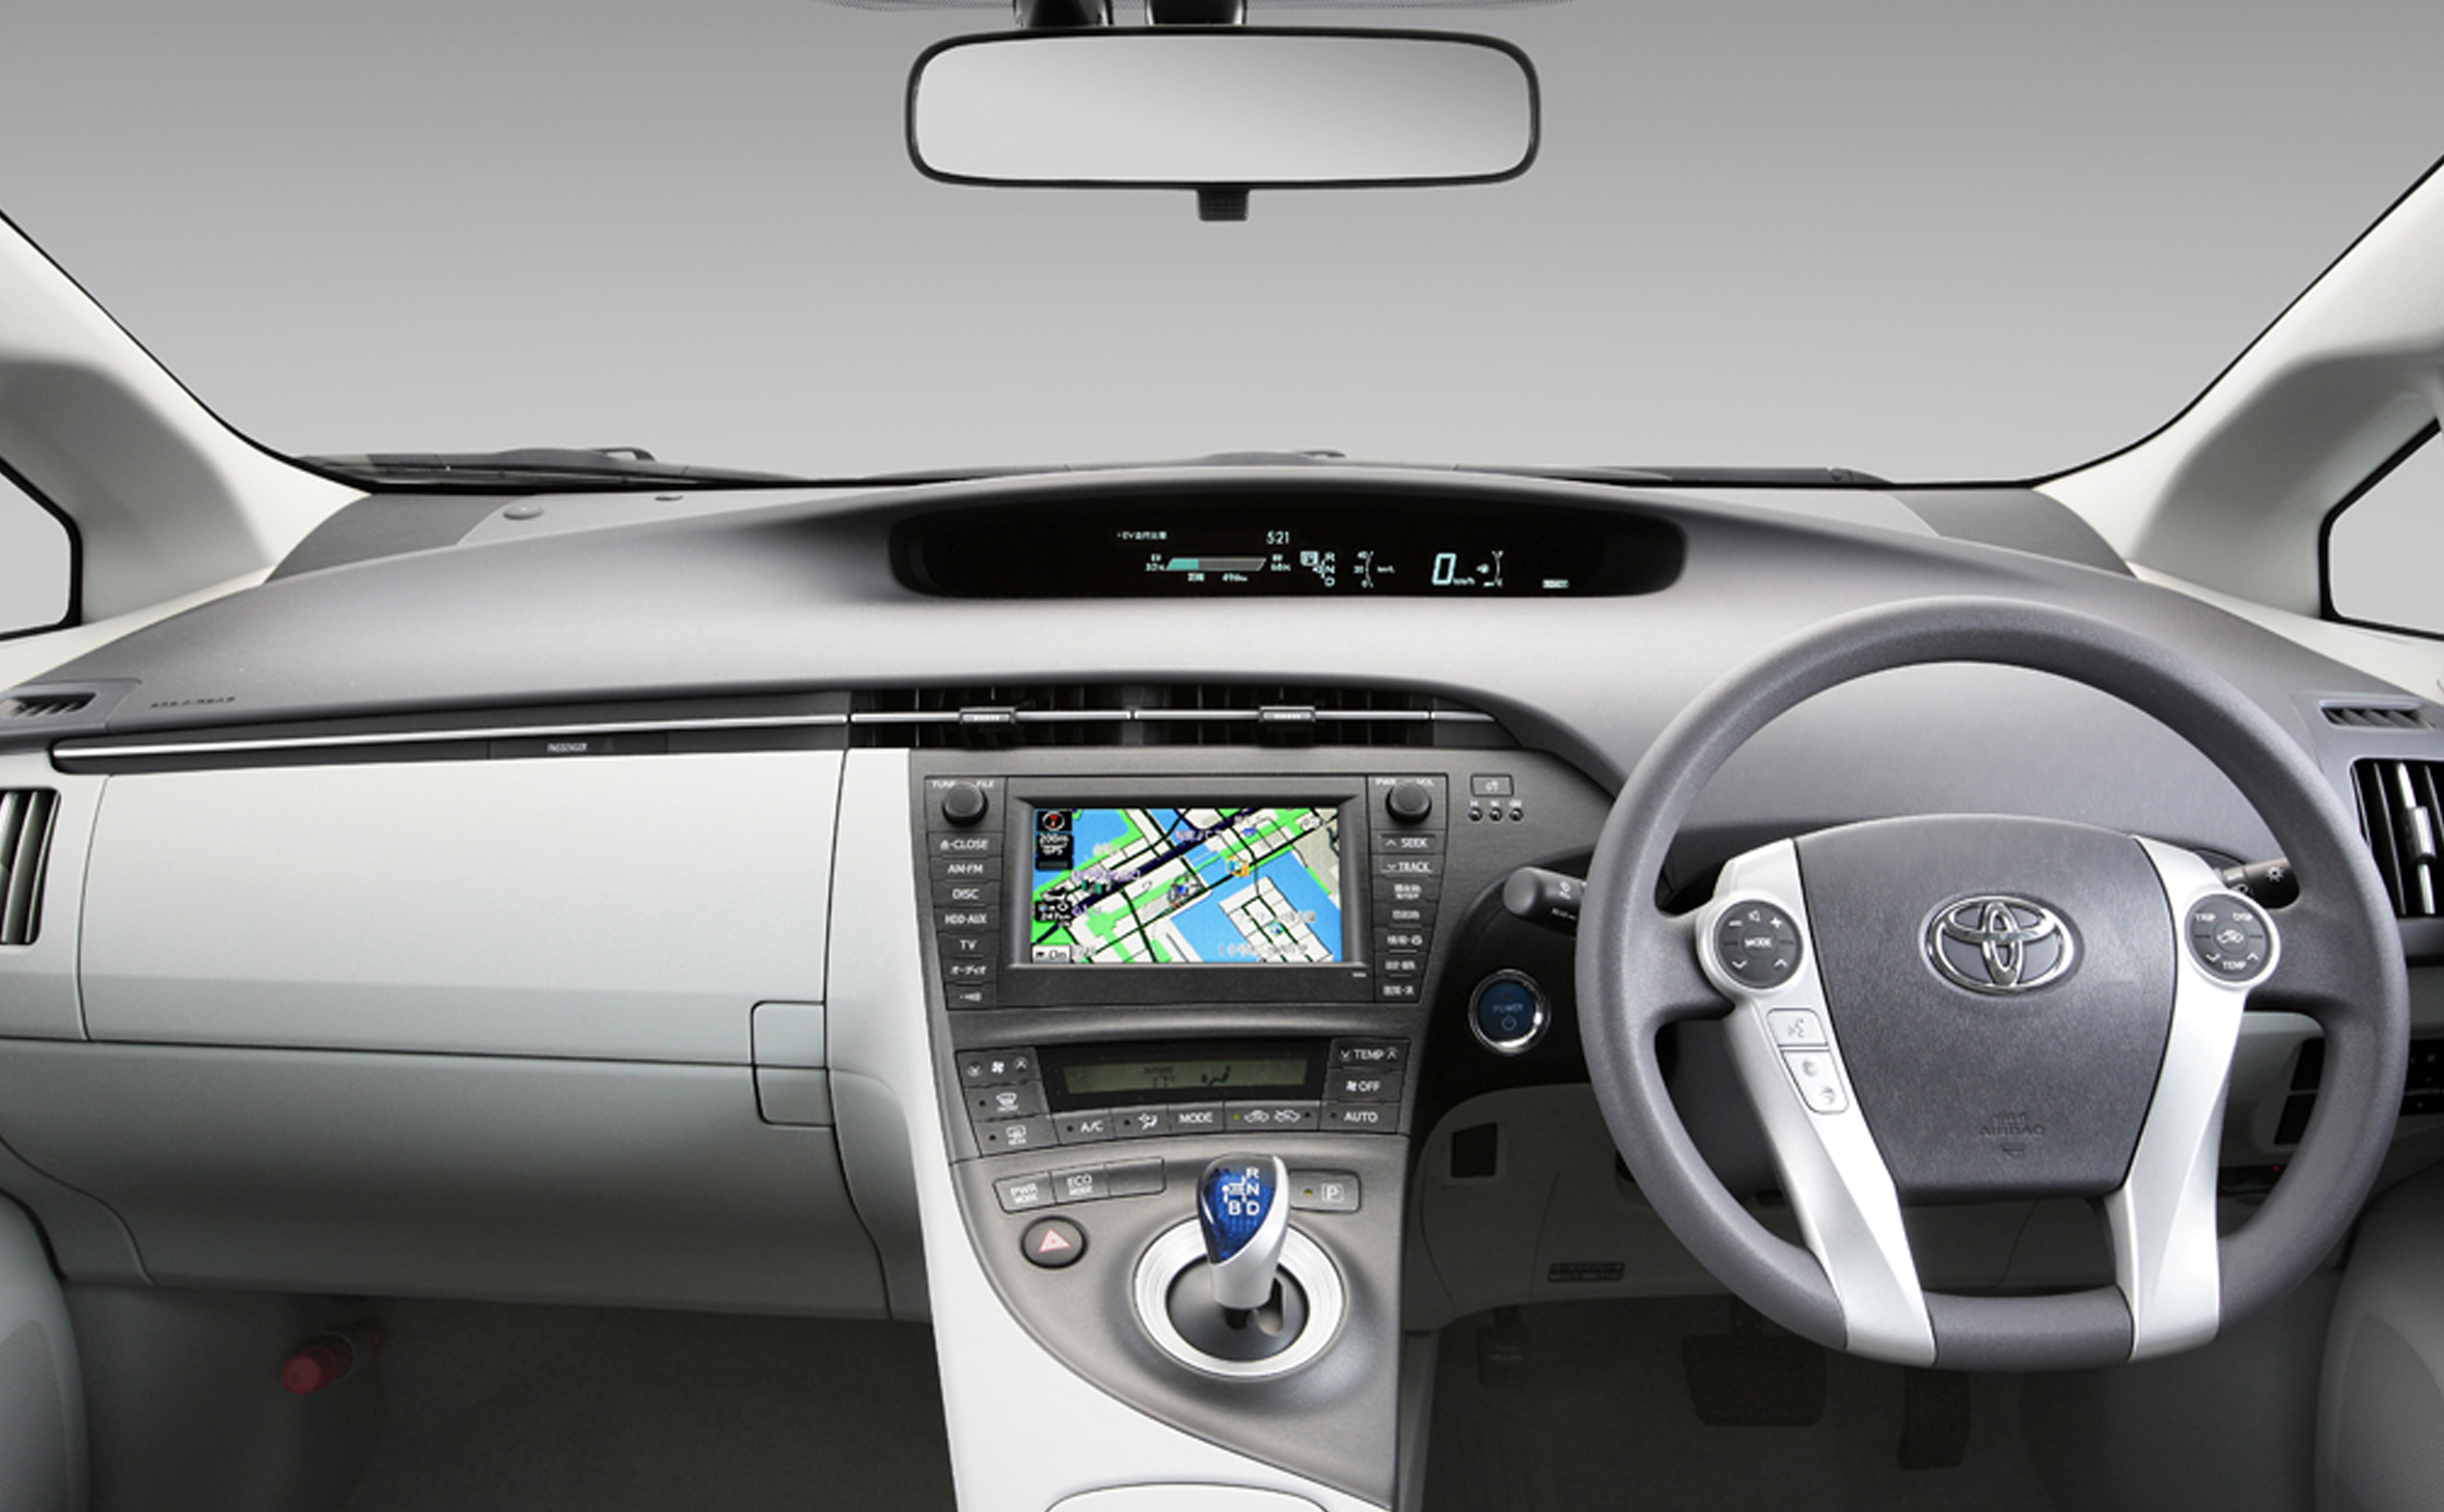 Toyota Prius 3rd Generation Interior Dashboard